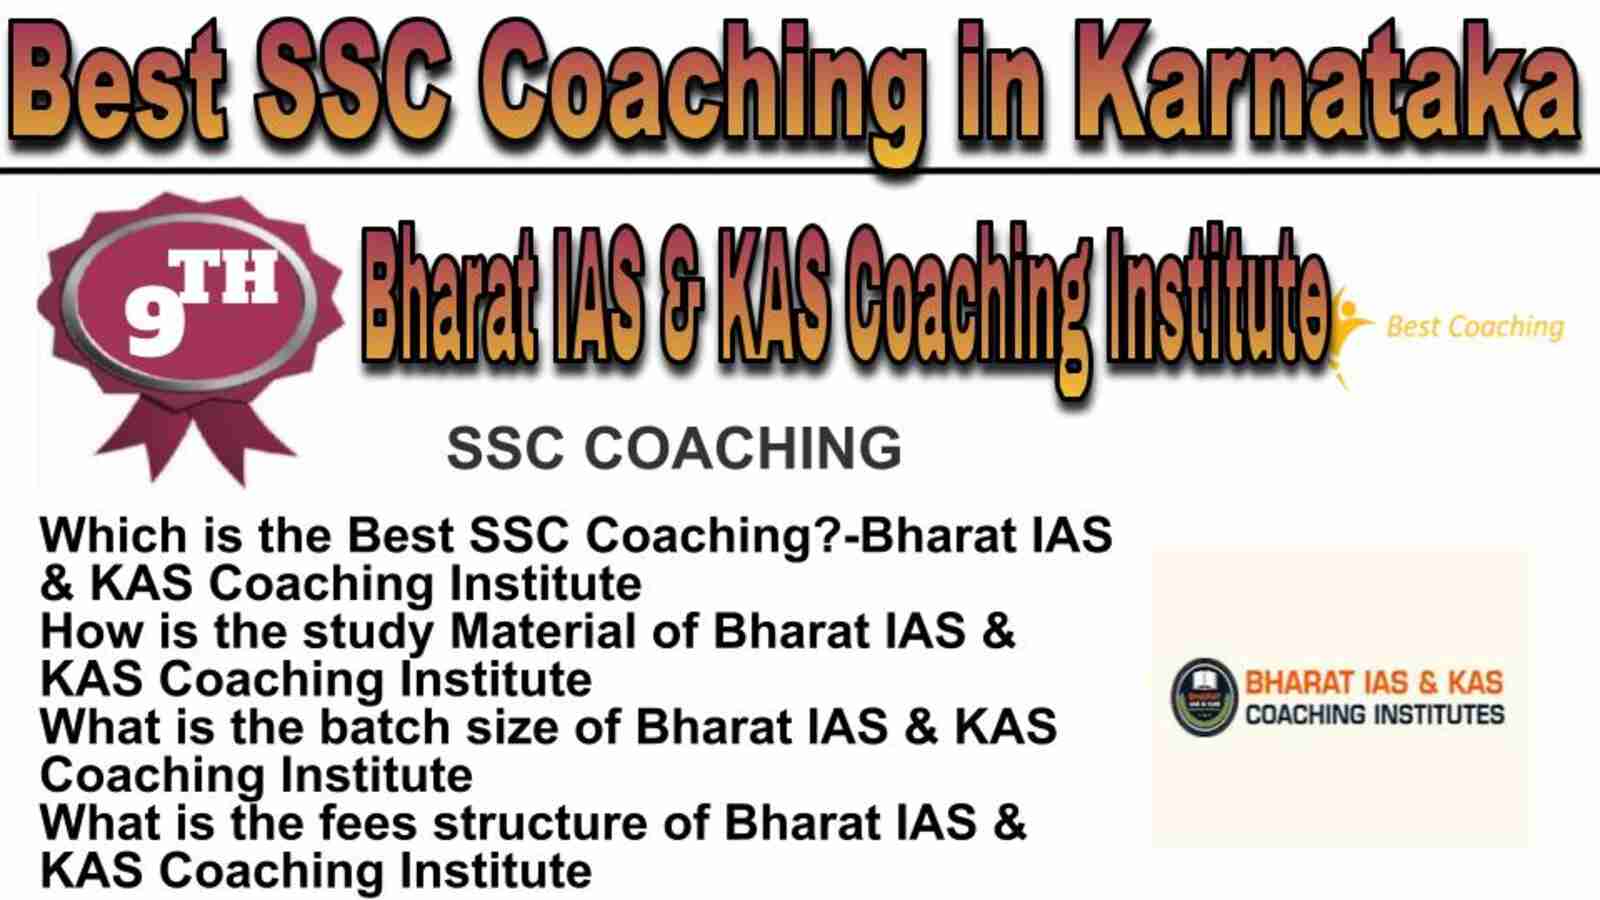 Rank 9 best SSC coaching in Karnataka